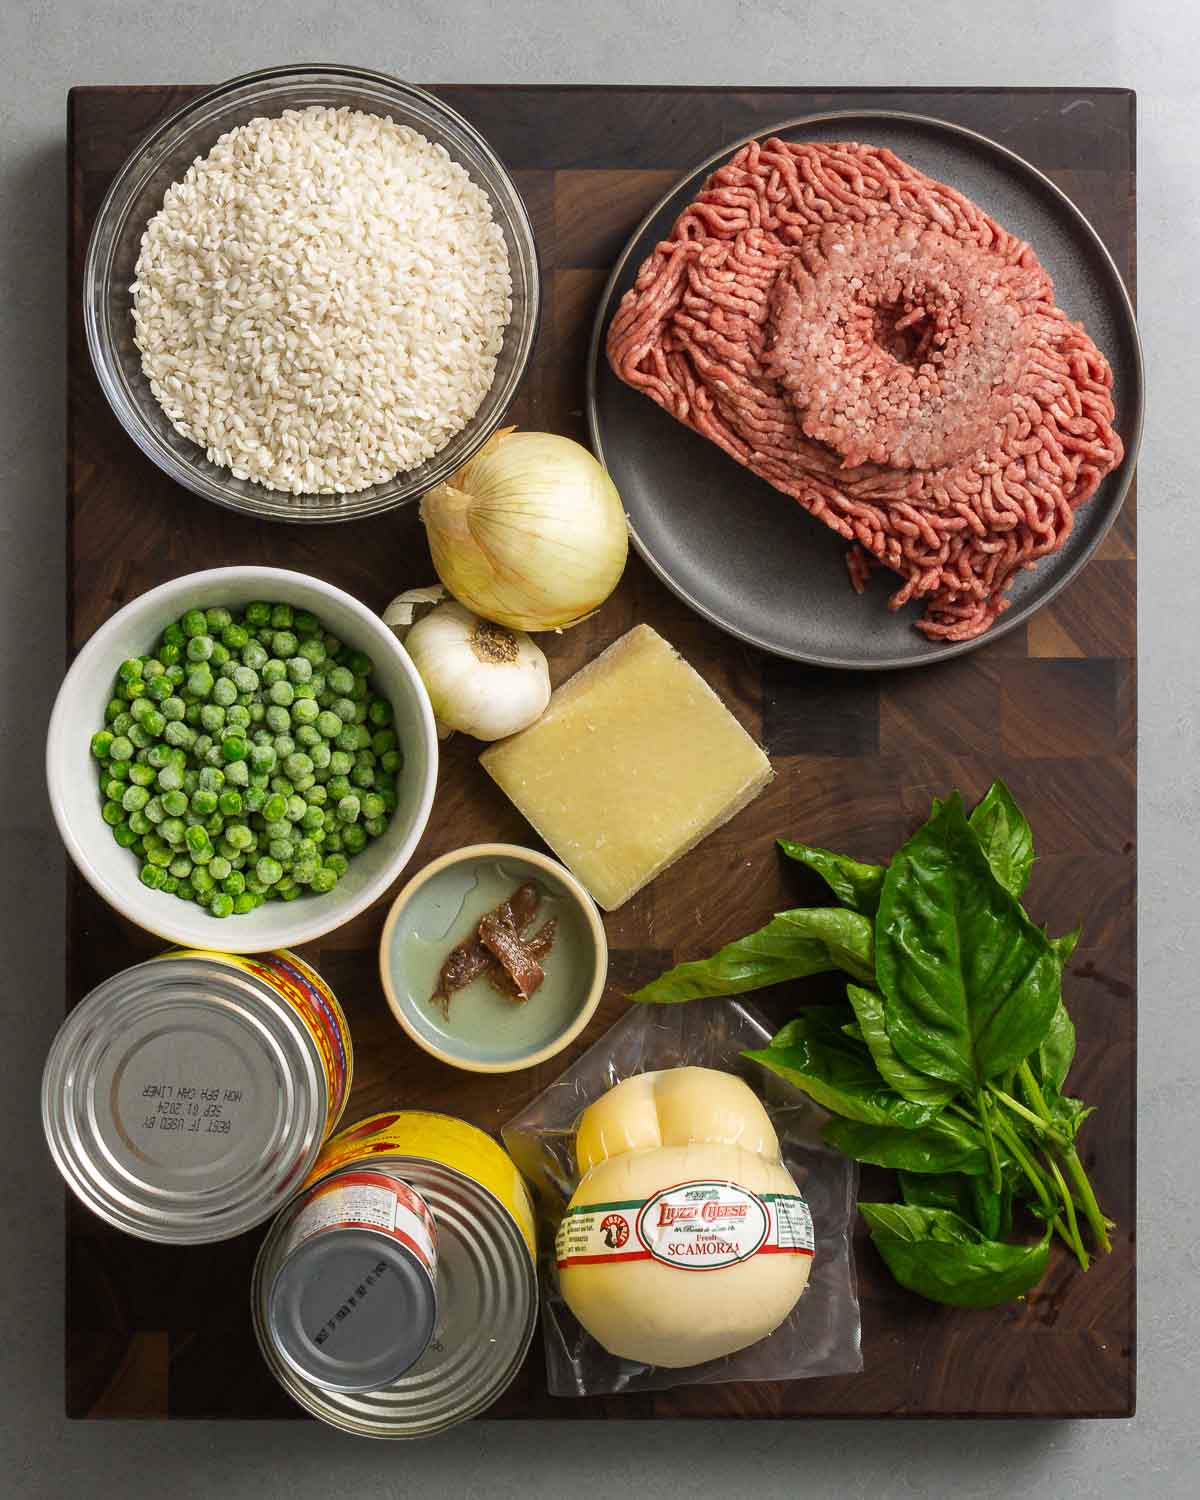 Ingredients shown: arborio rice, ground chuck, onion, garlic, peas, pecorino, scamorza, anchovy, tomatoes, and basil.